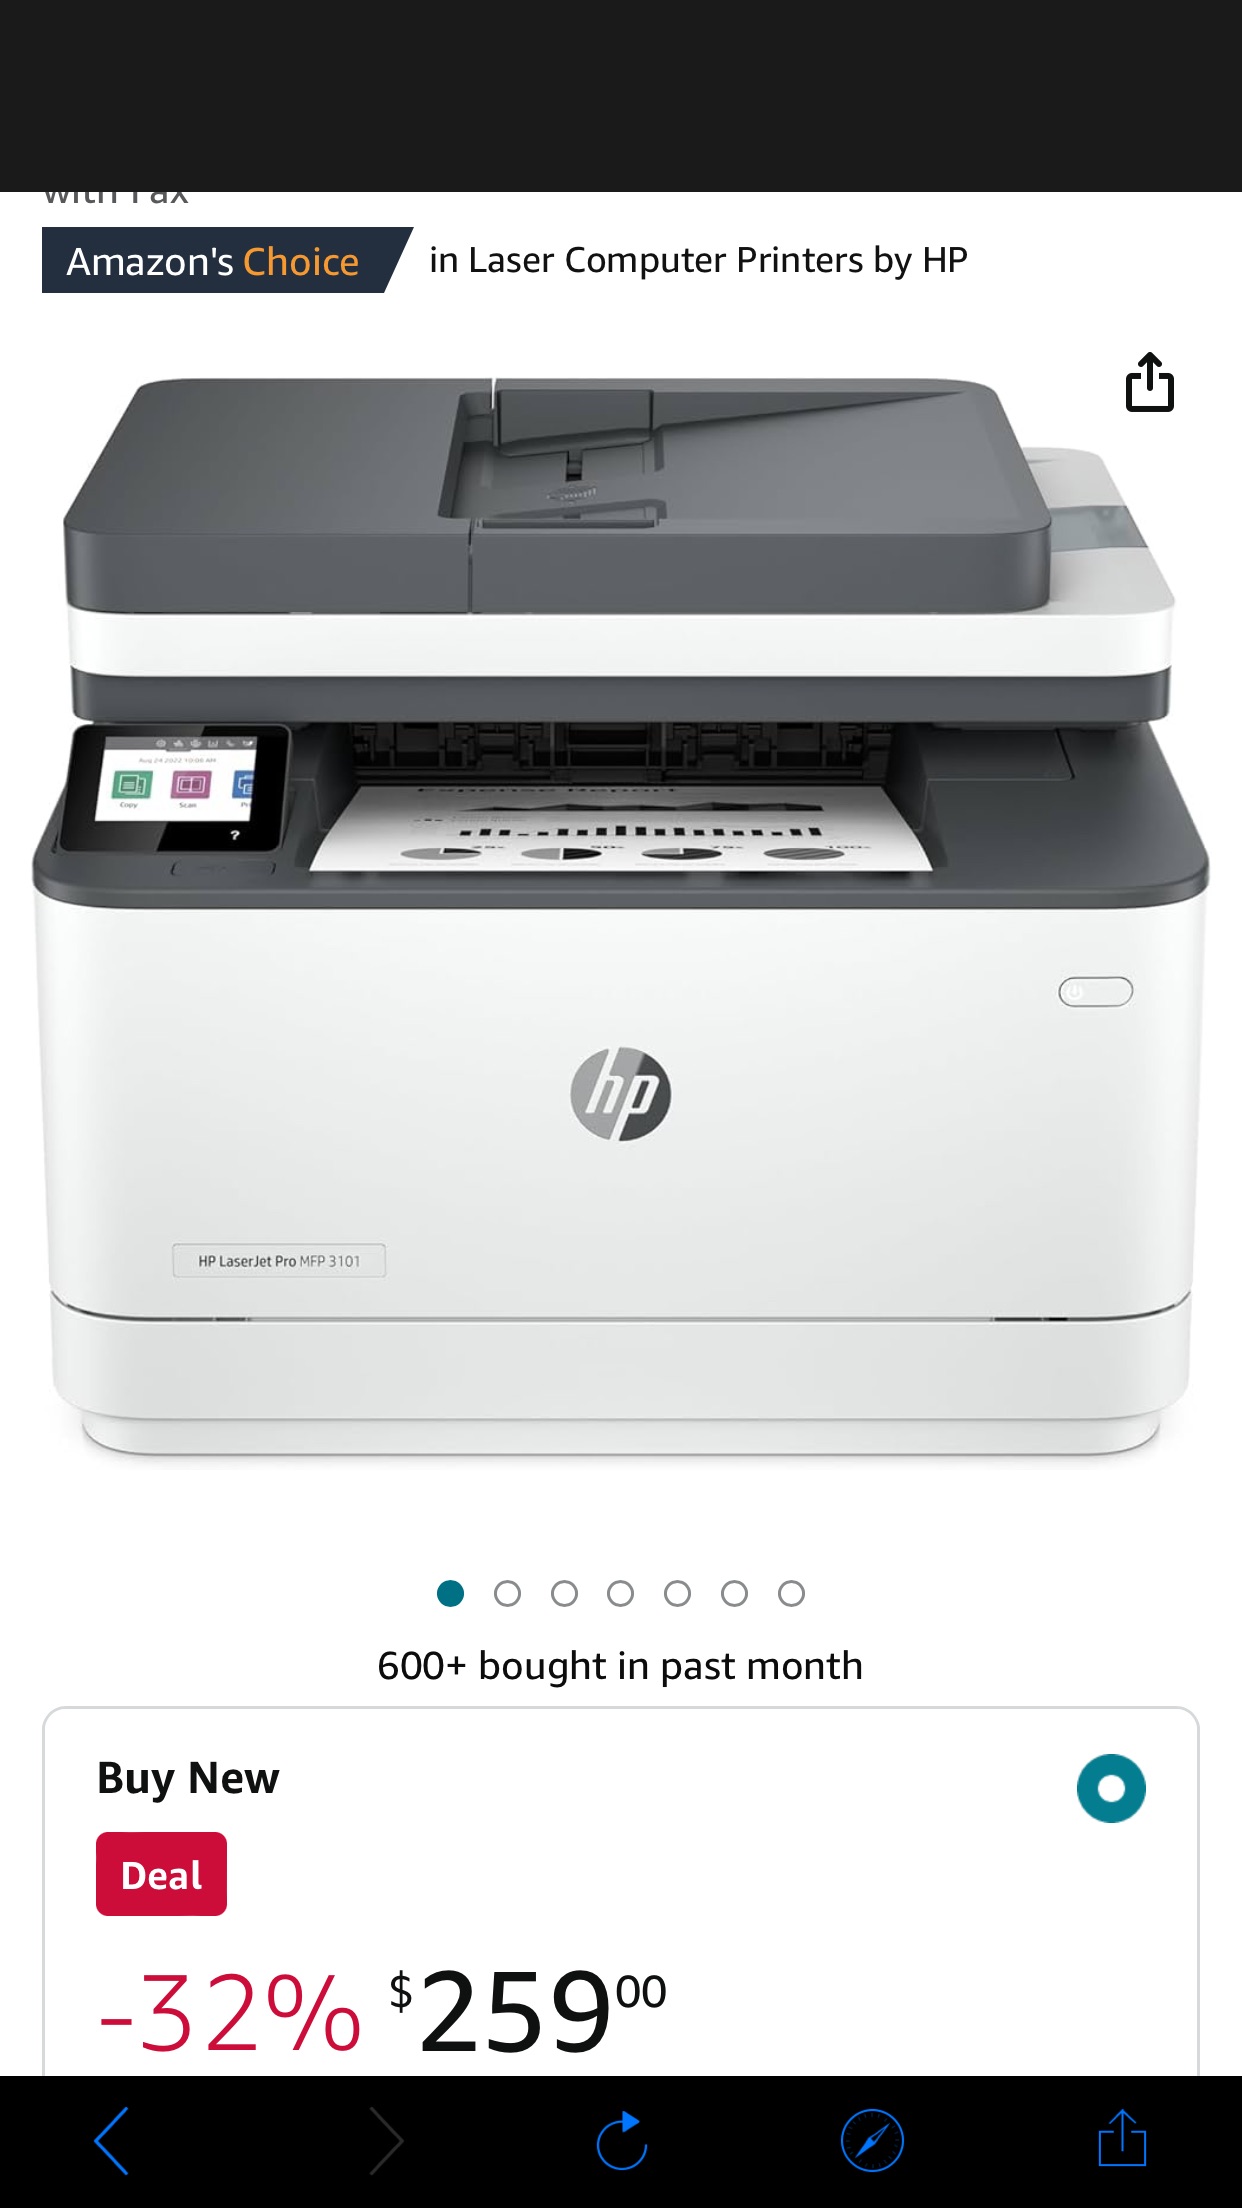 Amazon.com: HP Laserjet Pro MFP 3101fdw Wireless Black & White Printer with Fax